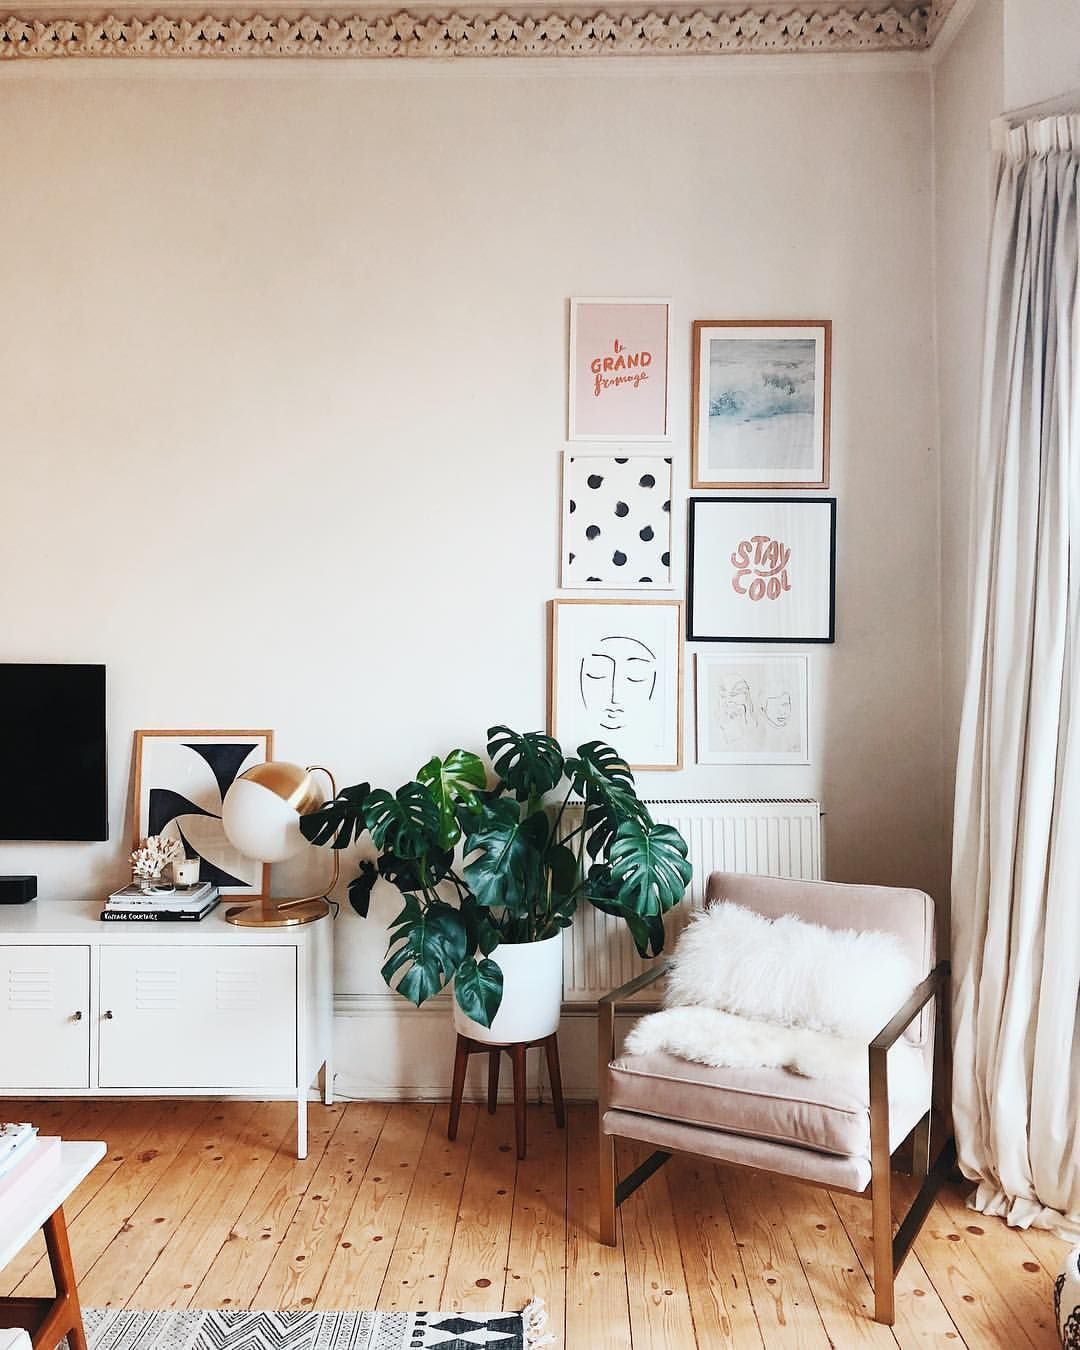 20 Inspirational Home Office Decor Ideas For 2019 -   11 planting Office decor ideas